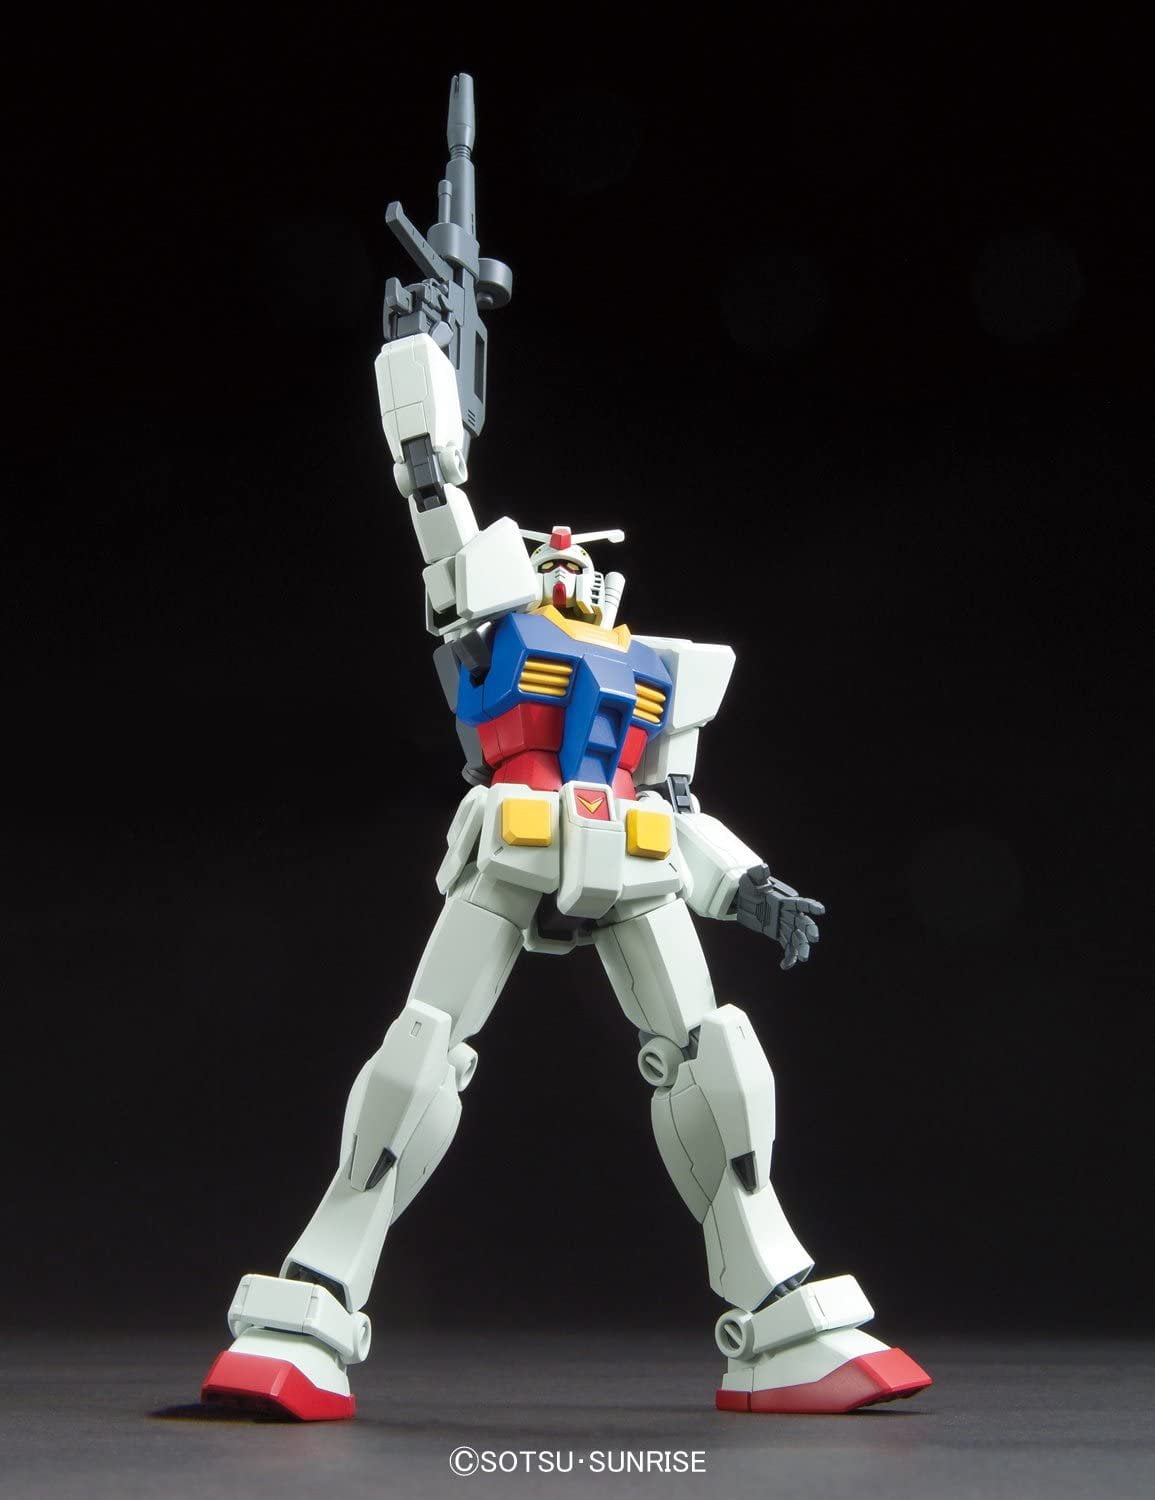 Bandai Hobby HGUC Rx-78-2 Gundam Revive Model Kit 1/144 Scale BAN196716 for sale online